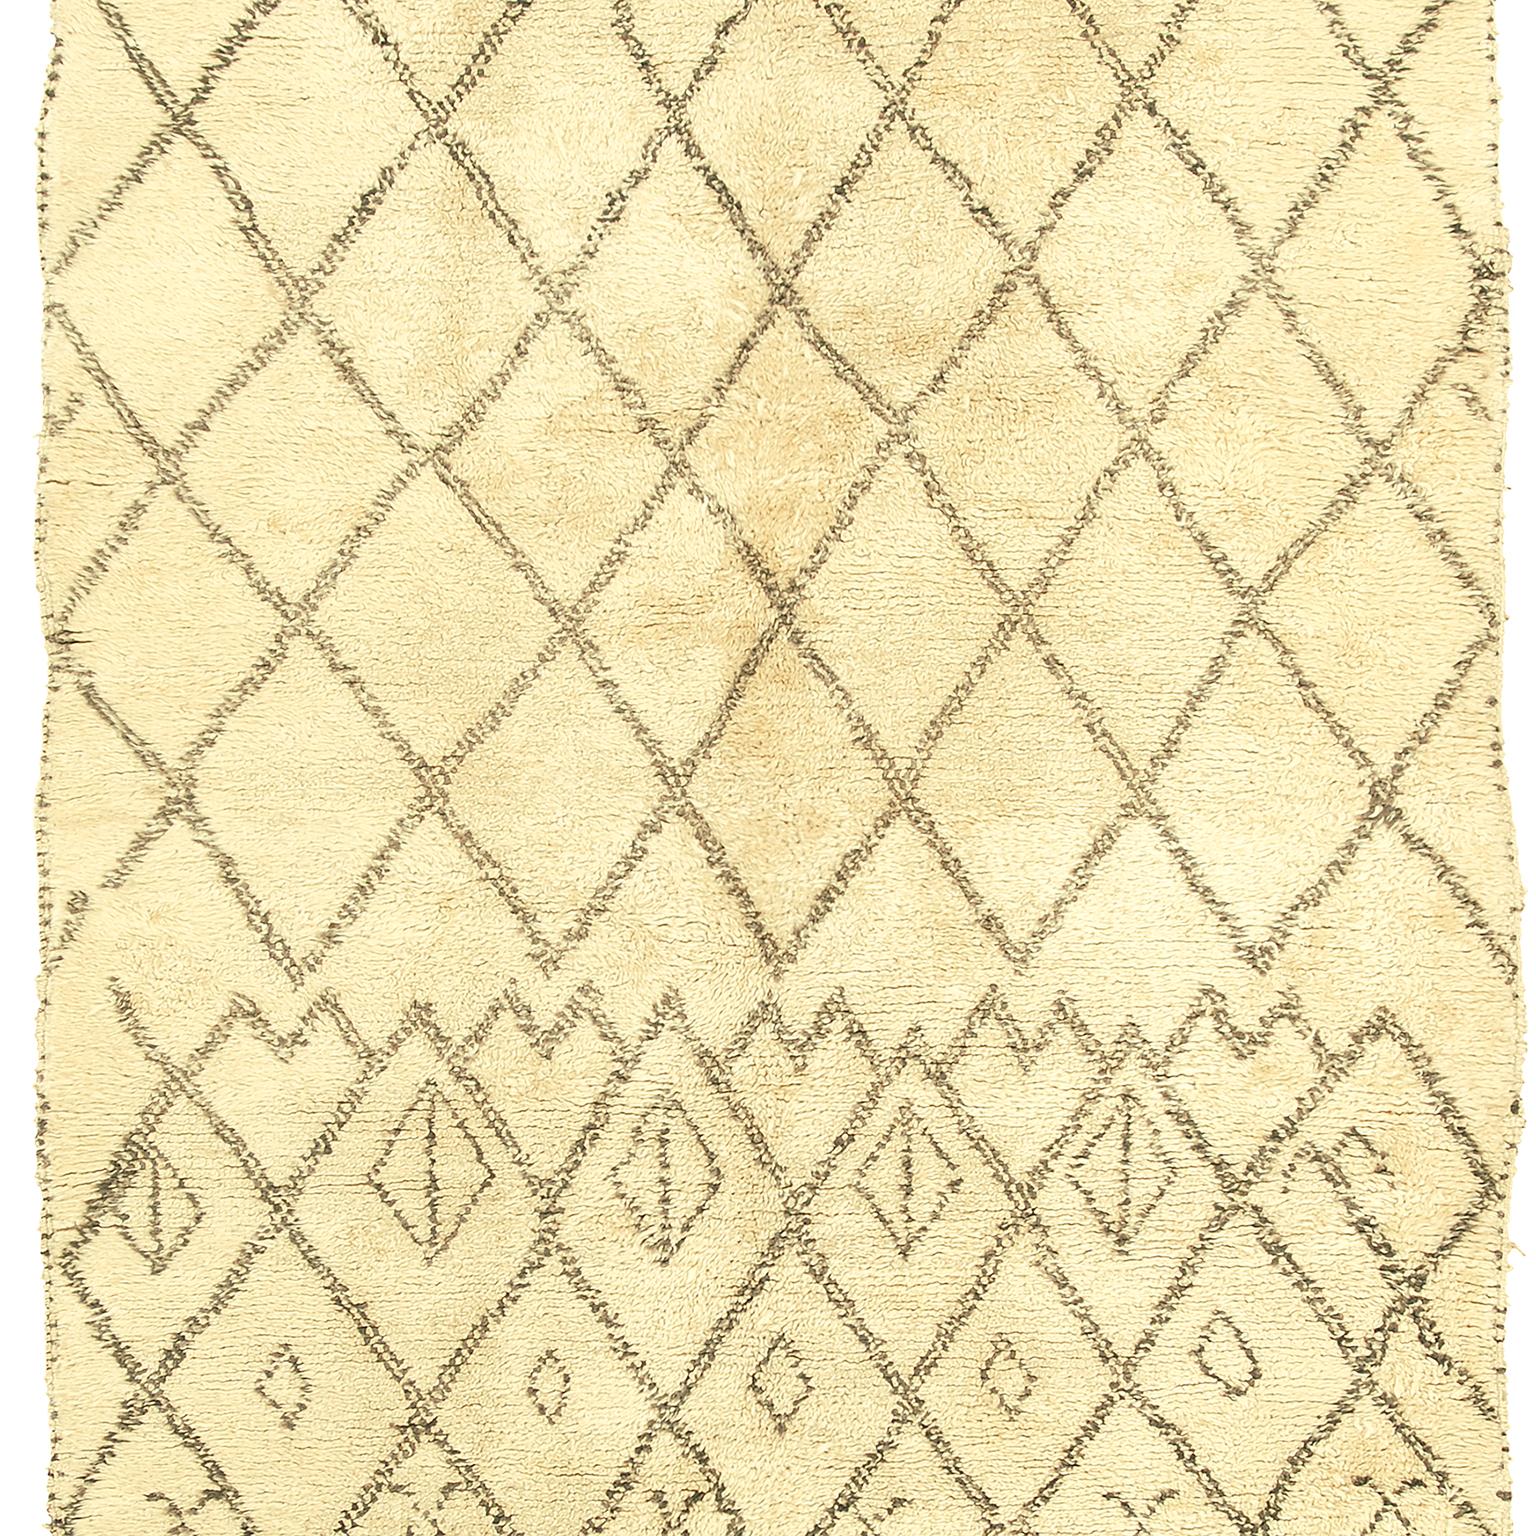 Hand-Woven Mid-20th Century Moroccan Beni Ourain Carpet For Sale